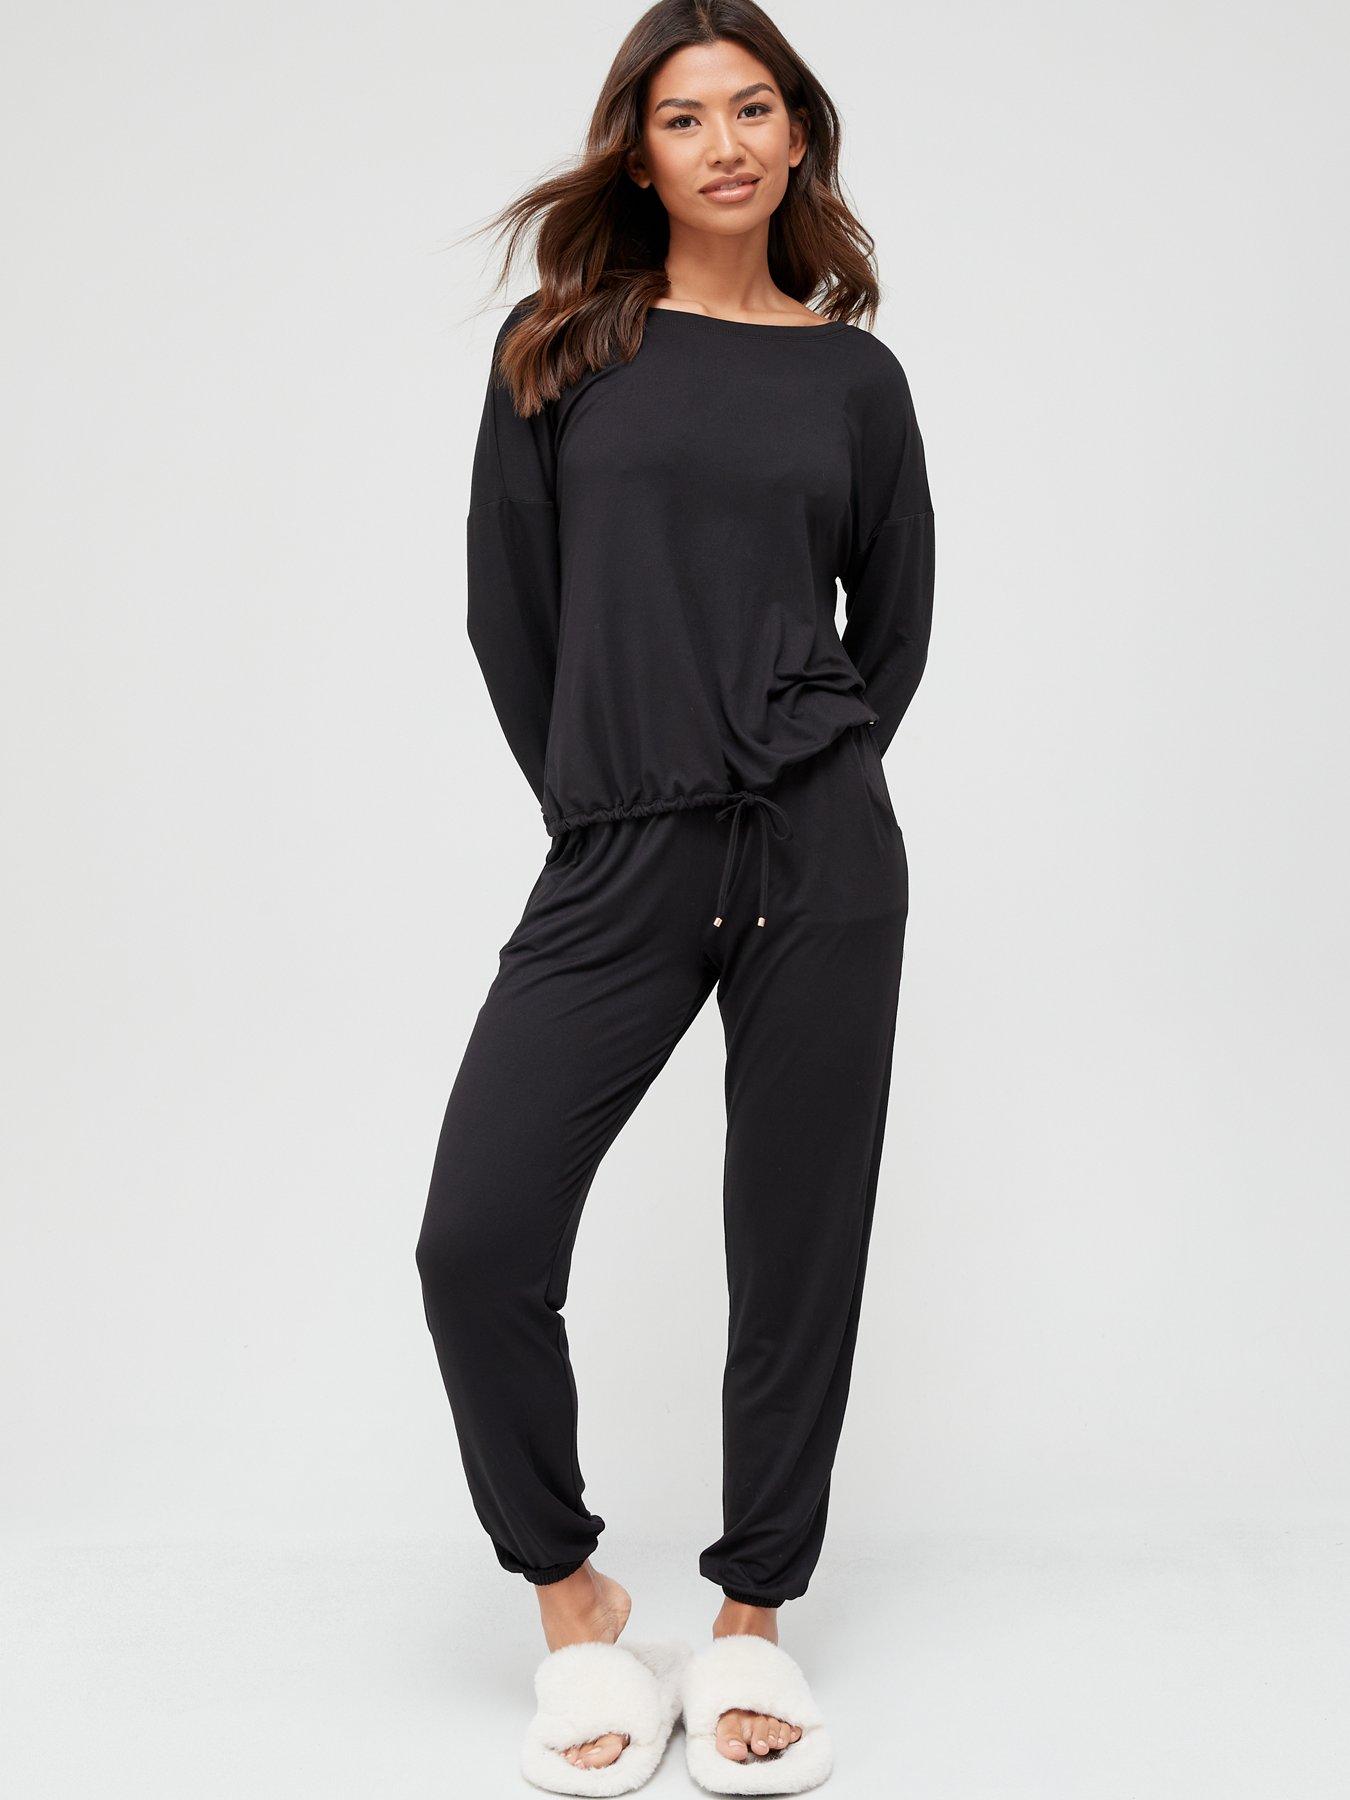 https://media.very.co.uk/i/very/UHM9C_SQ1_0000000004_BLACK_MDf/v-by-very-off-the-shoulder-slouchy-pyjamas-black.jpg?$180x240_retinamobilex2$